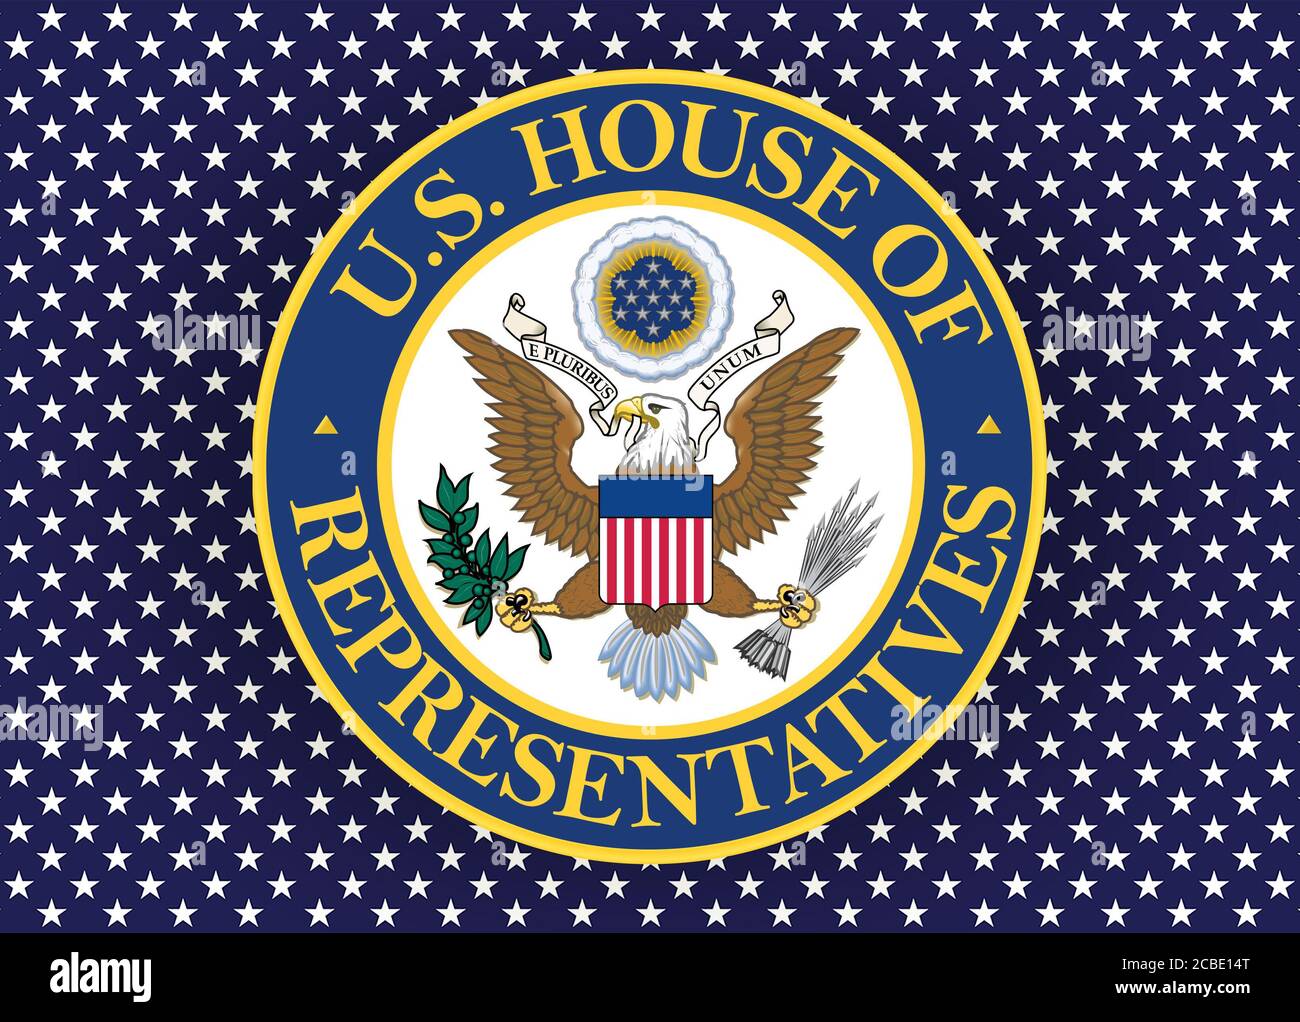 United States House of Representatives Stock Photo